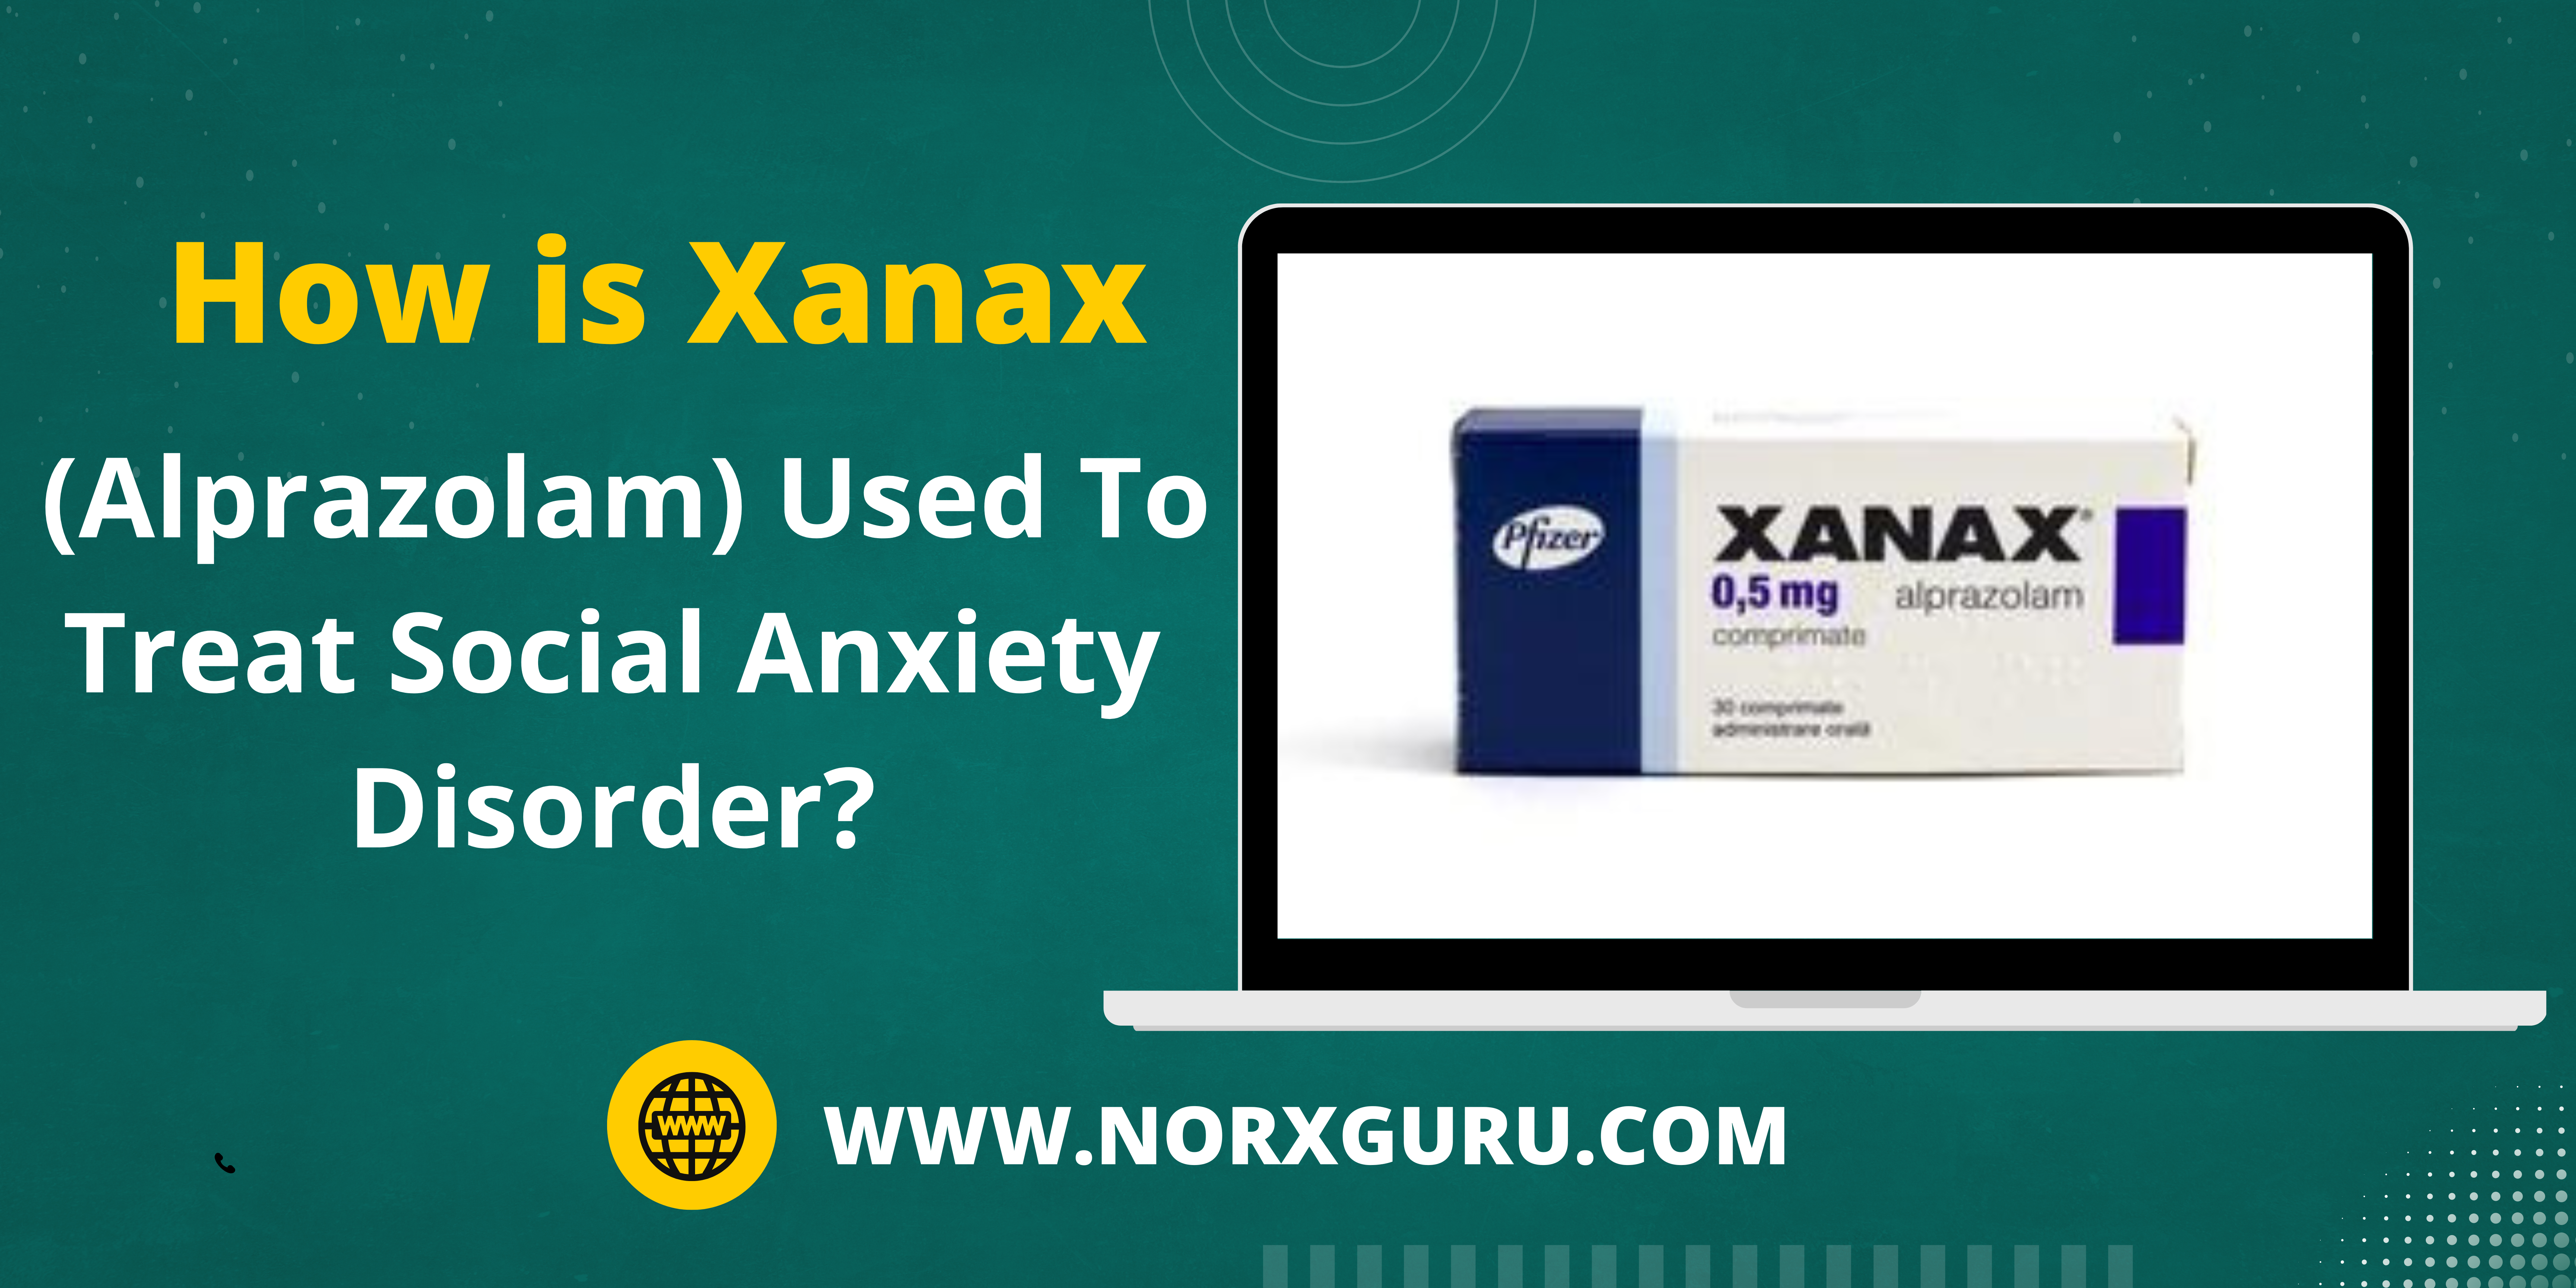 How is Xanax (Alprazolam) Used To Treat Social Anxiety Disorder?